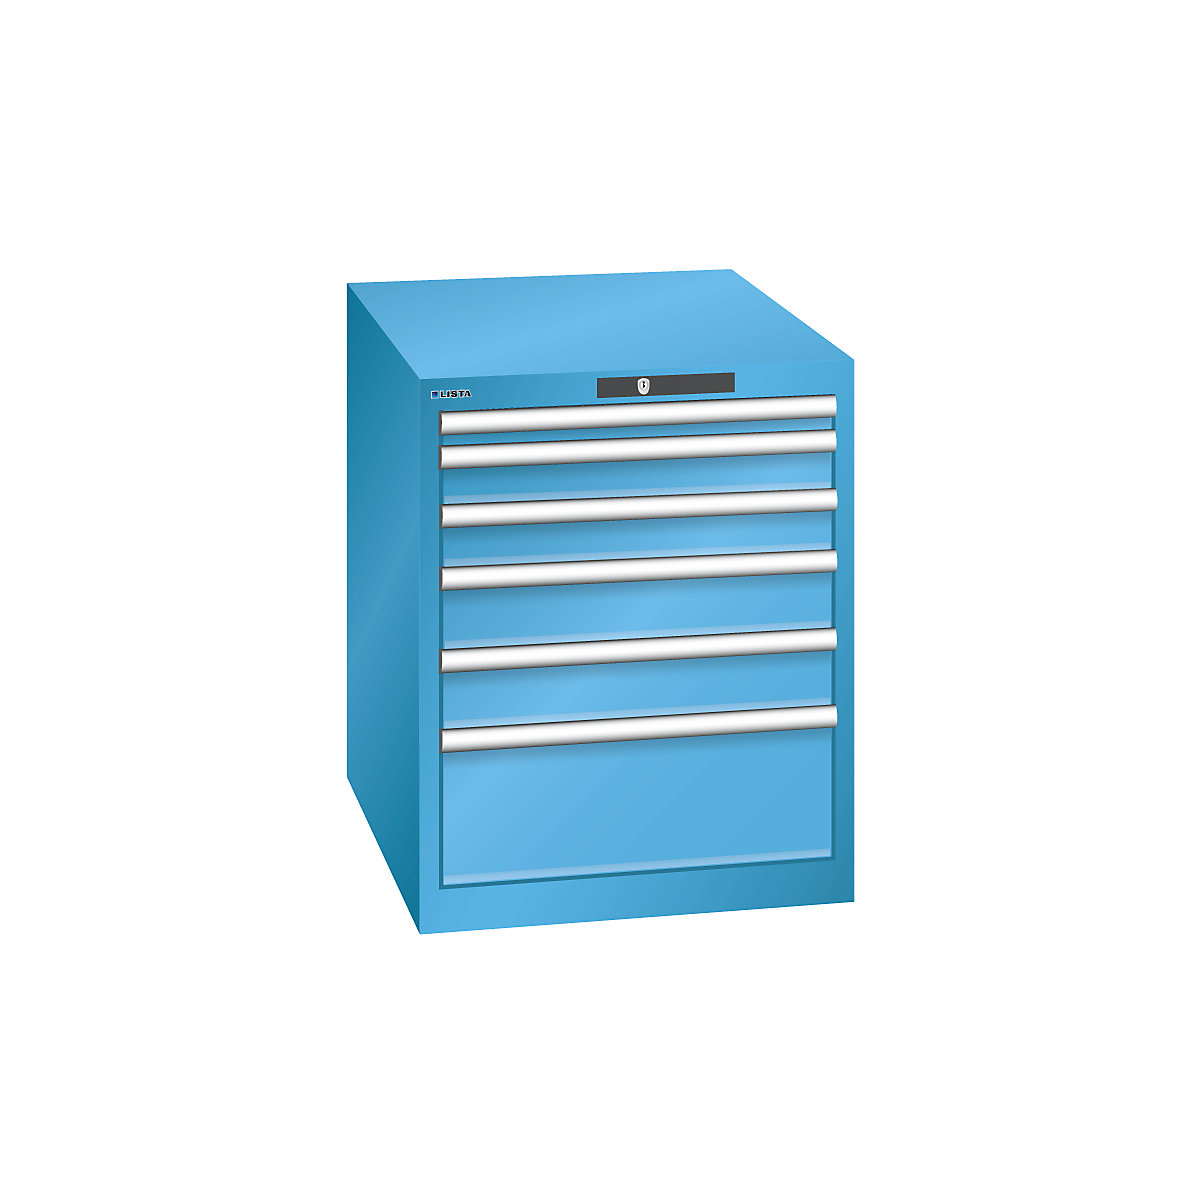 Drawer cupboard, 6 drawers – LISTA